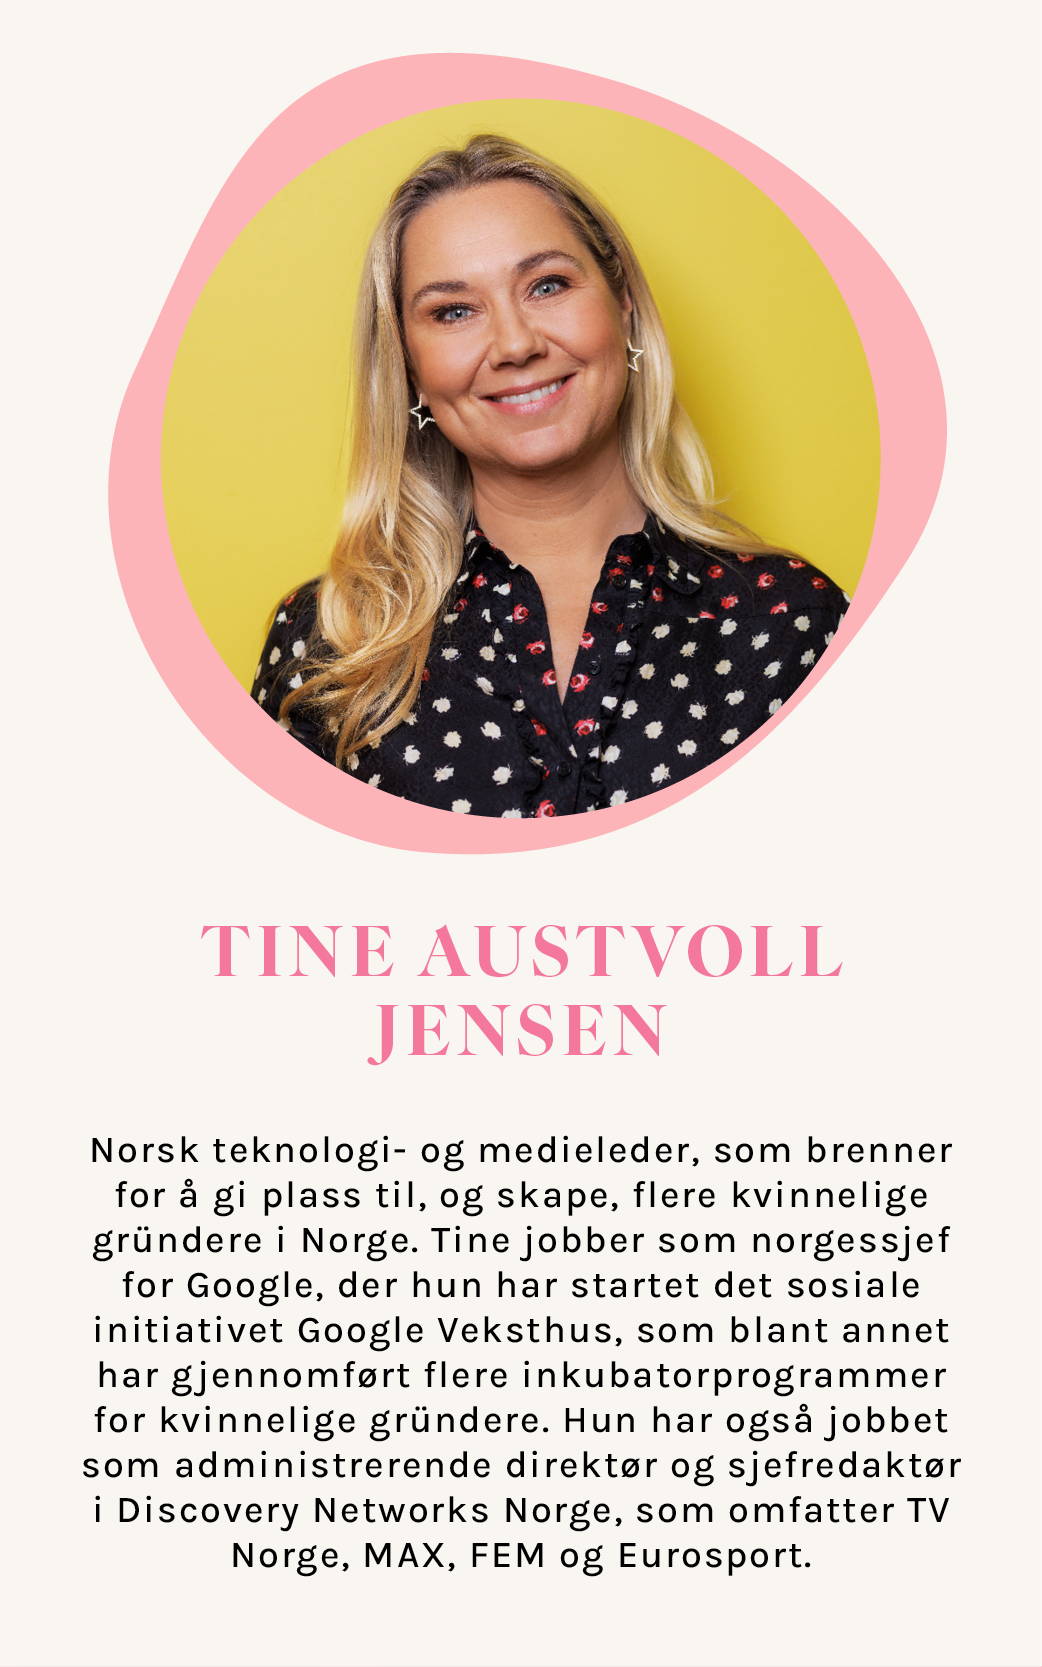 Jurymedlem Tine Austvoll Jensen